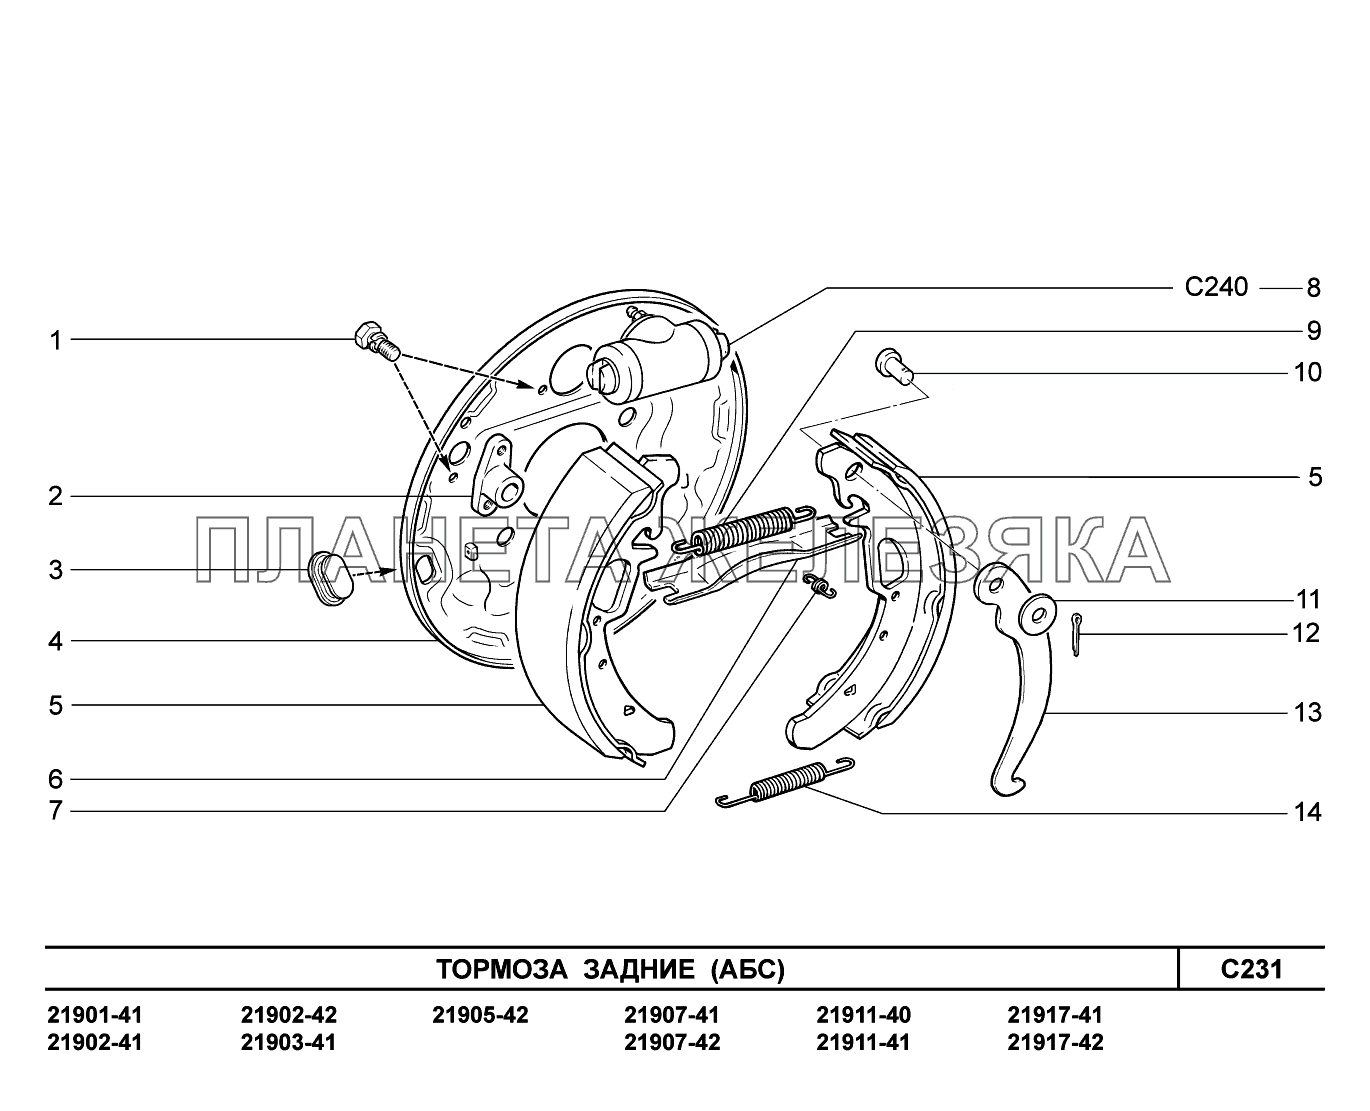 C231. Тормоза задние Lada Granta-2190